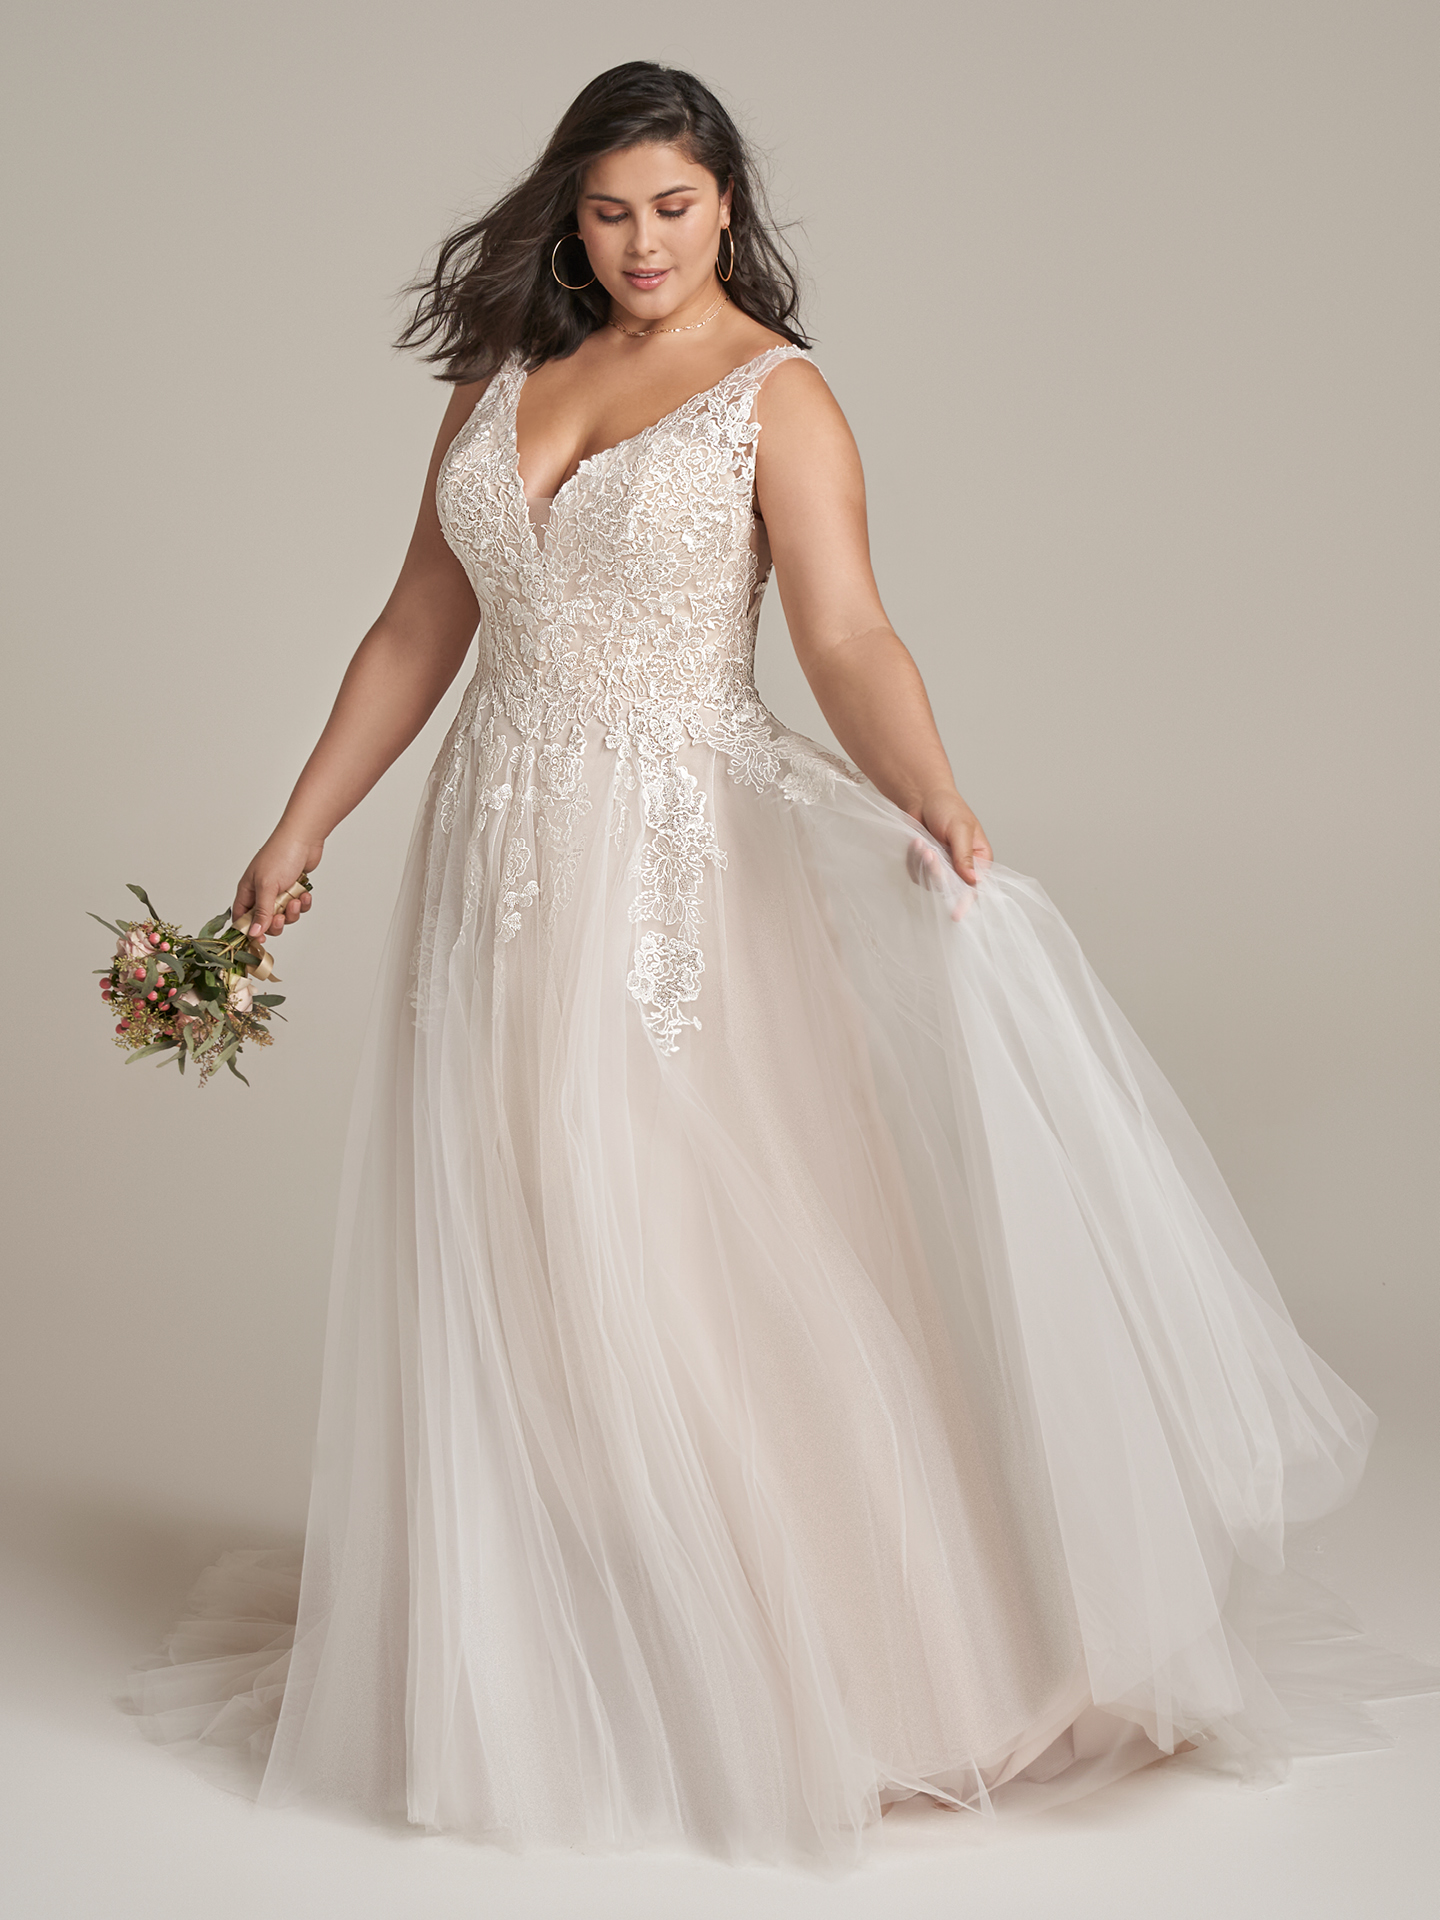 Plus Size Bride In A-Line Wedding Dress Called Emily Lynette By Rebecca Ingram